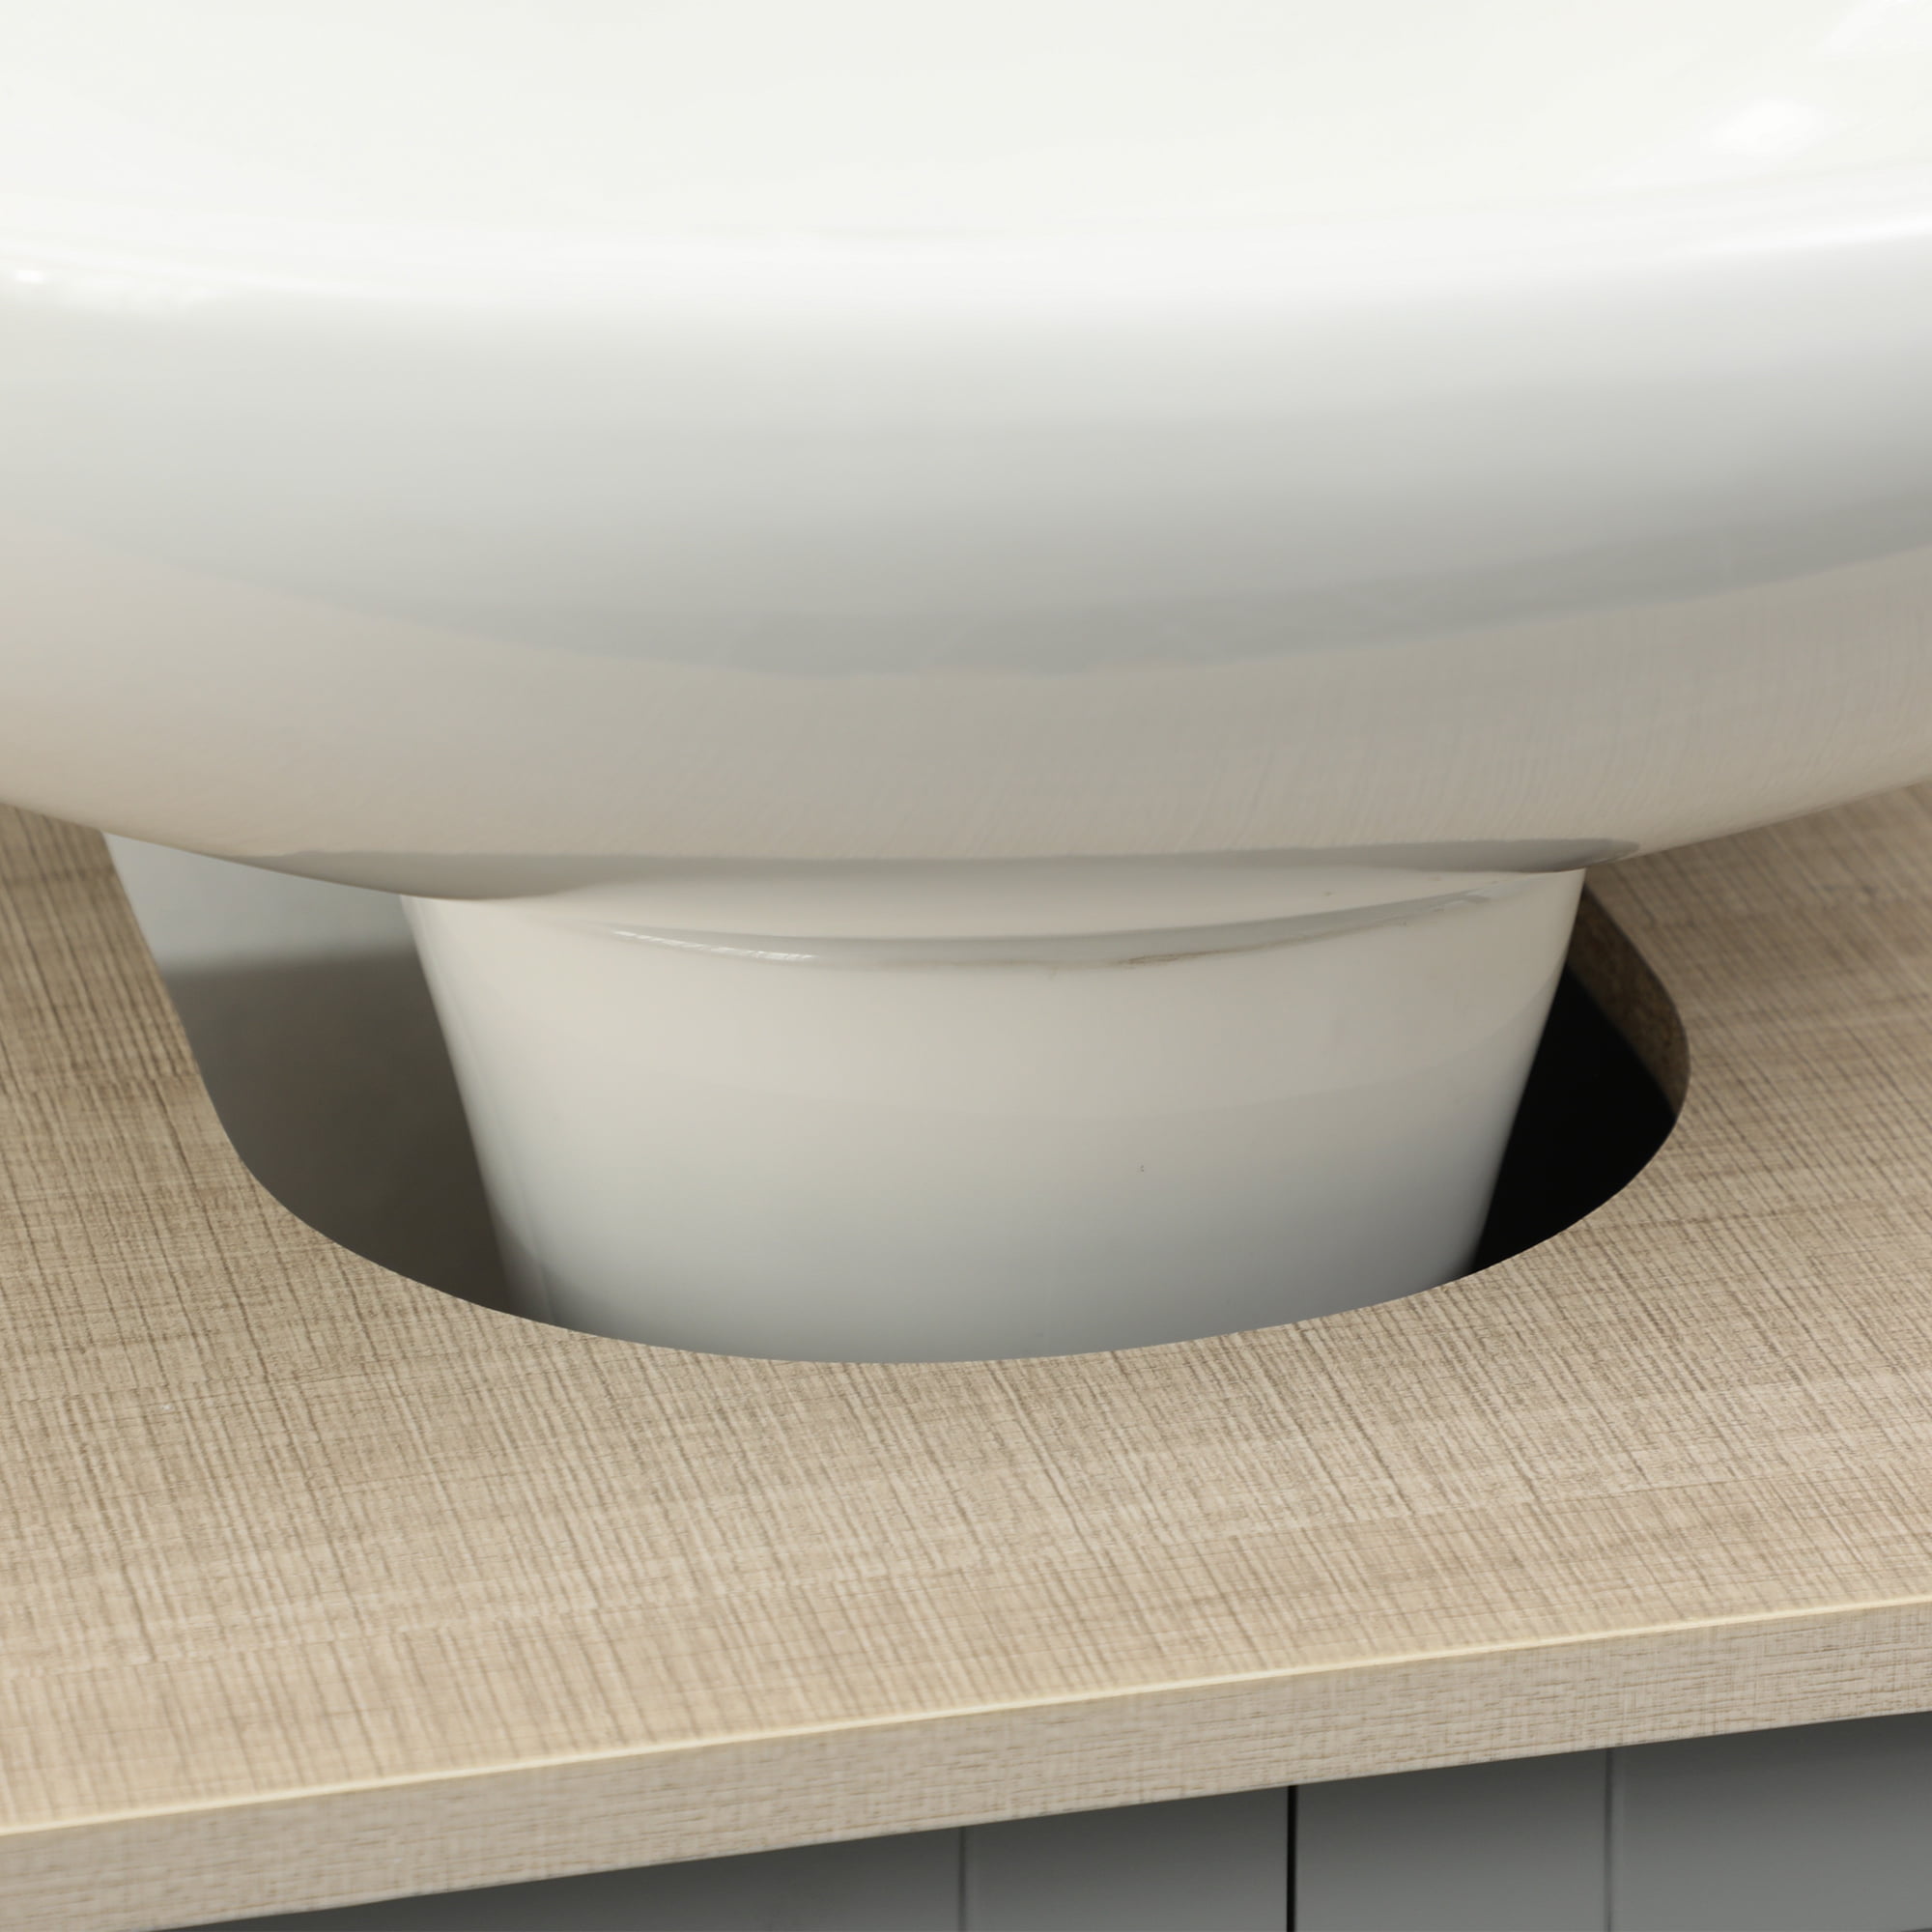 Rebrilliant Hodgkinson Bathroom Shelf for Pedestal Sinks Review